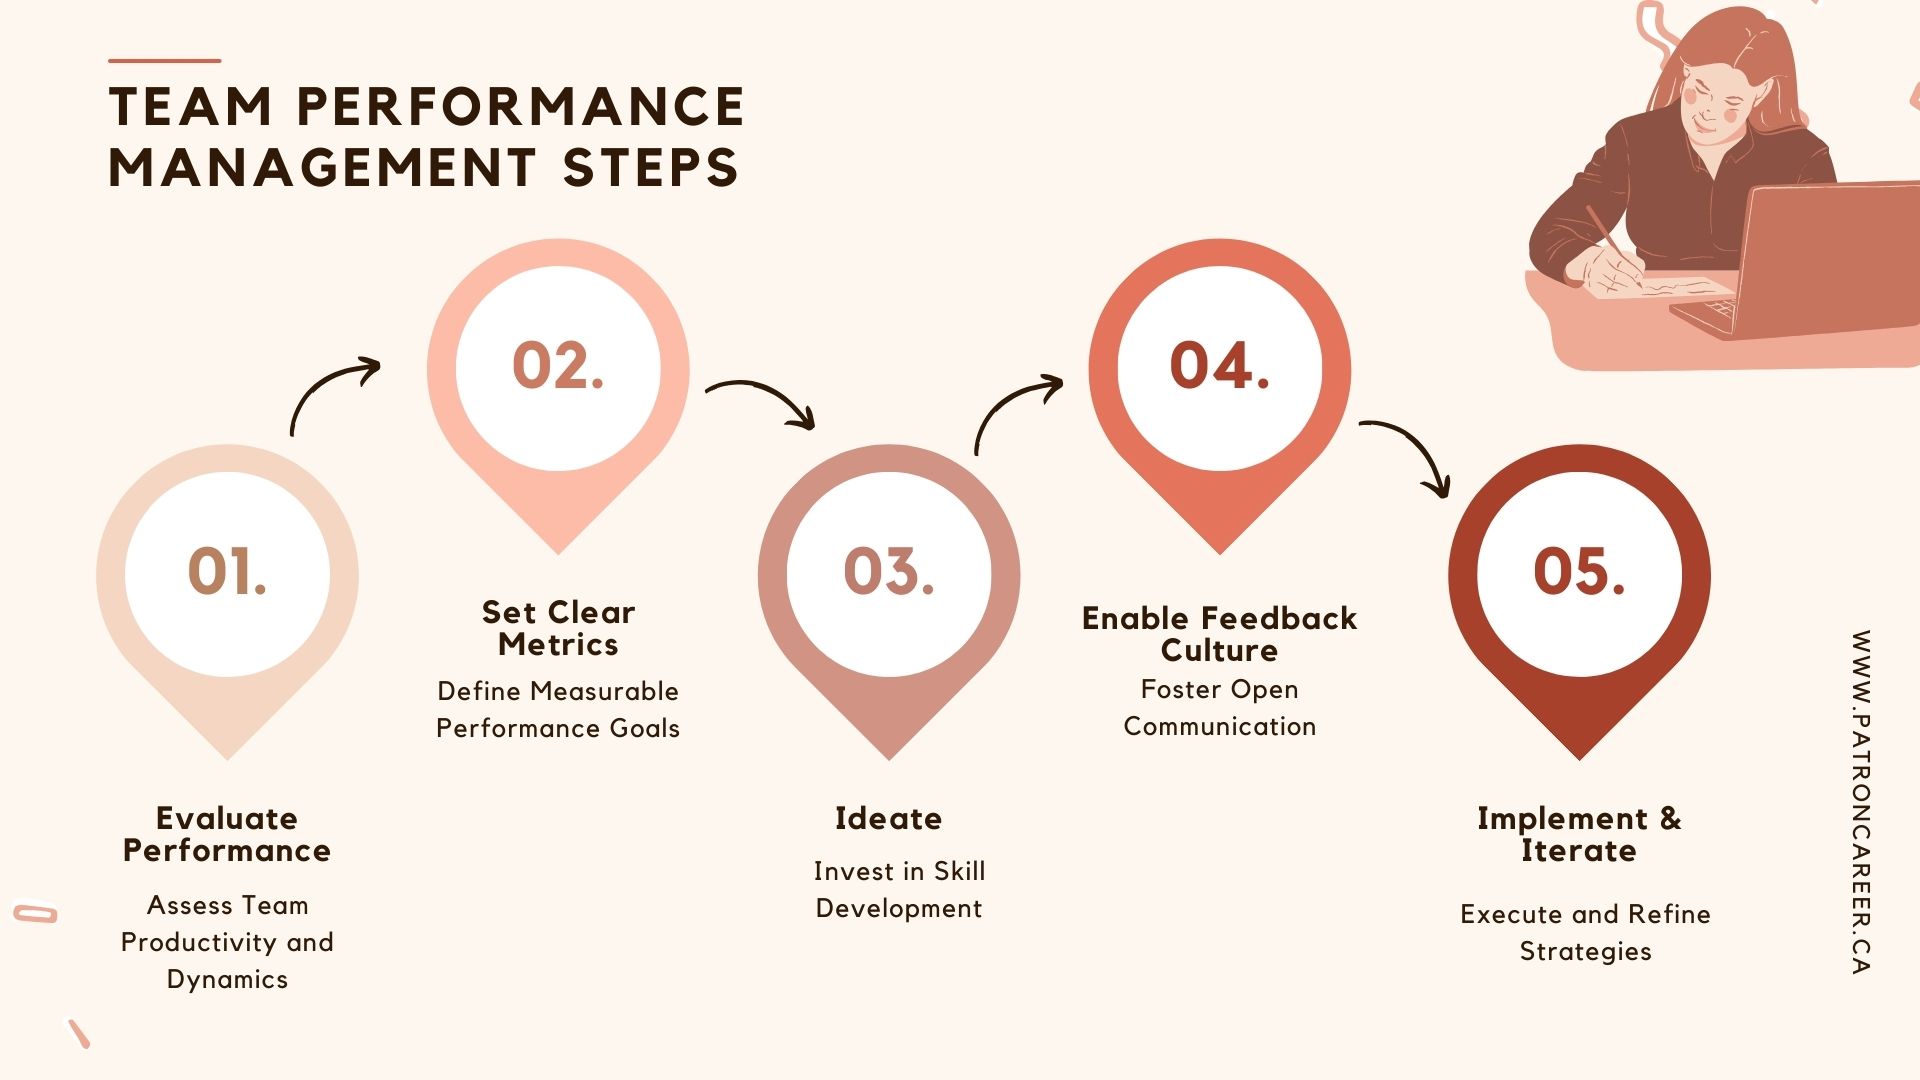 5 steps of Team Performance Management